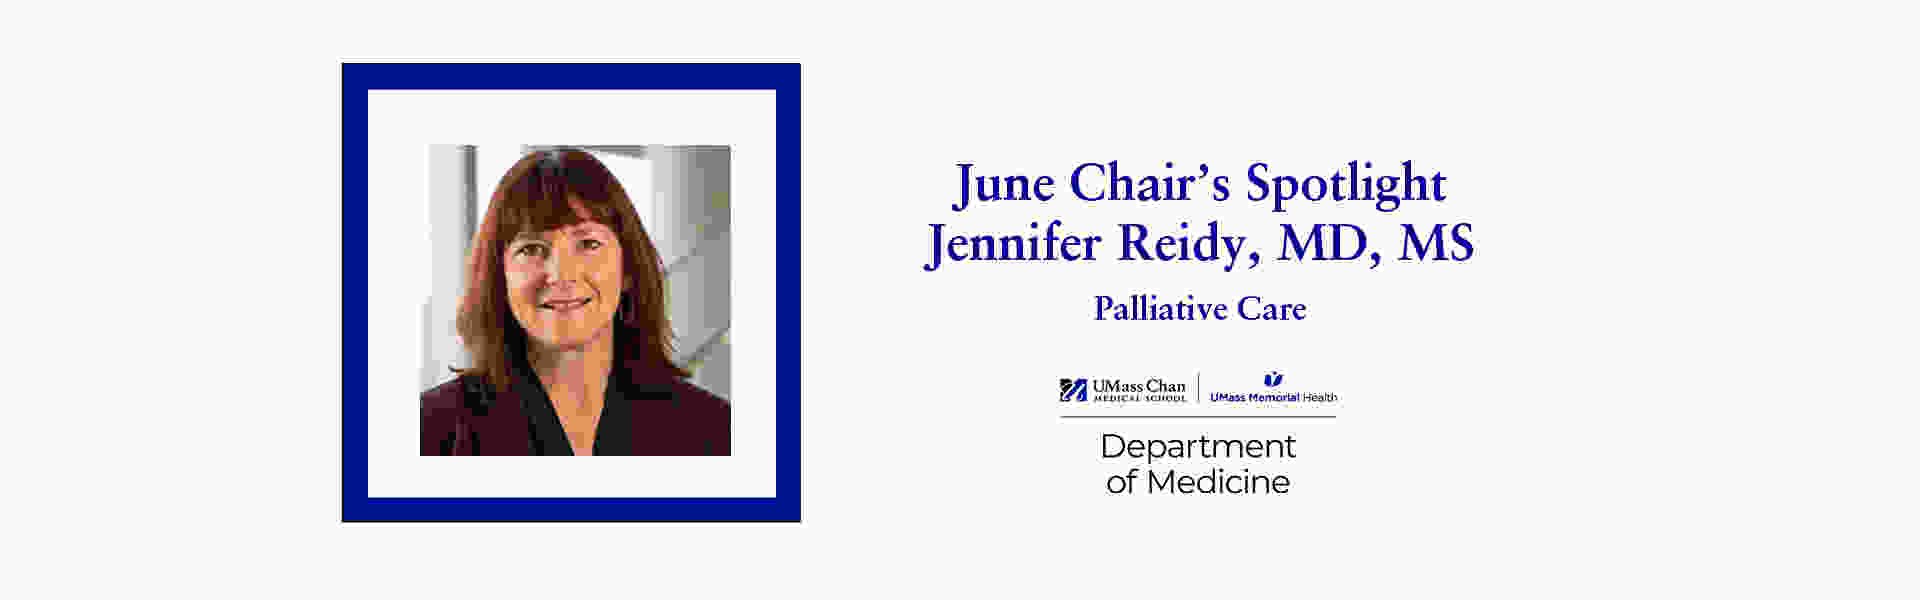 Jennifer Reidy, MD, MS